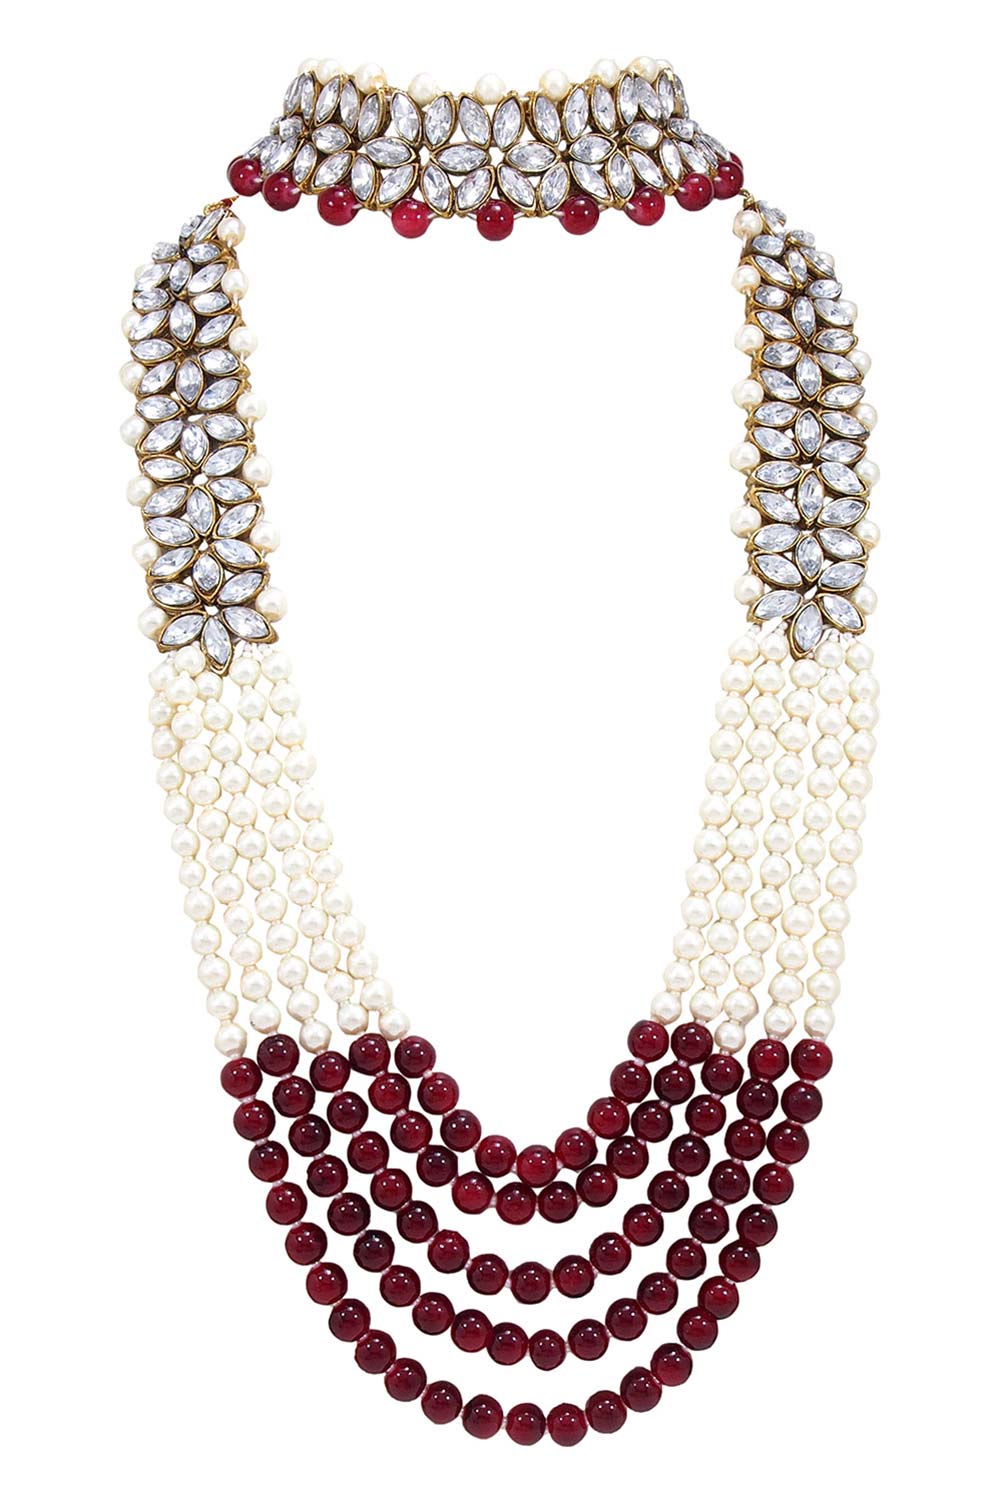 Buy Women's Alloy Necklace Set in Maroon Online - Front